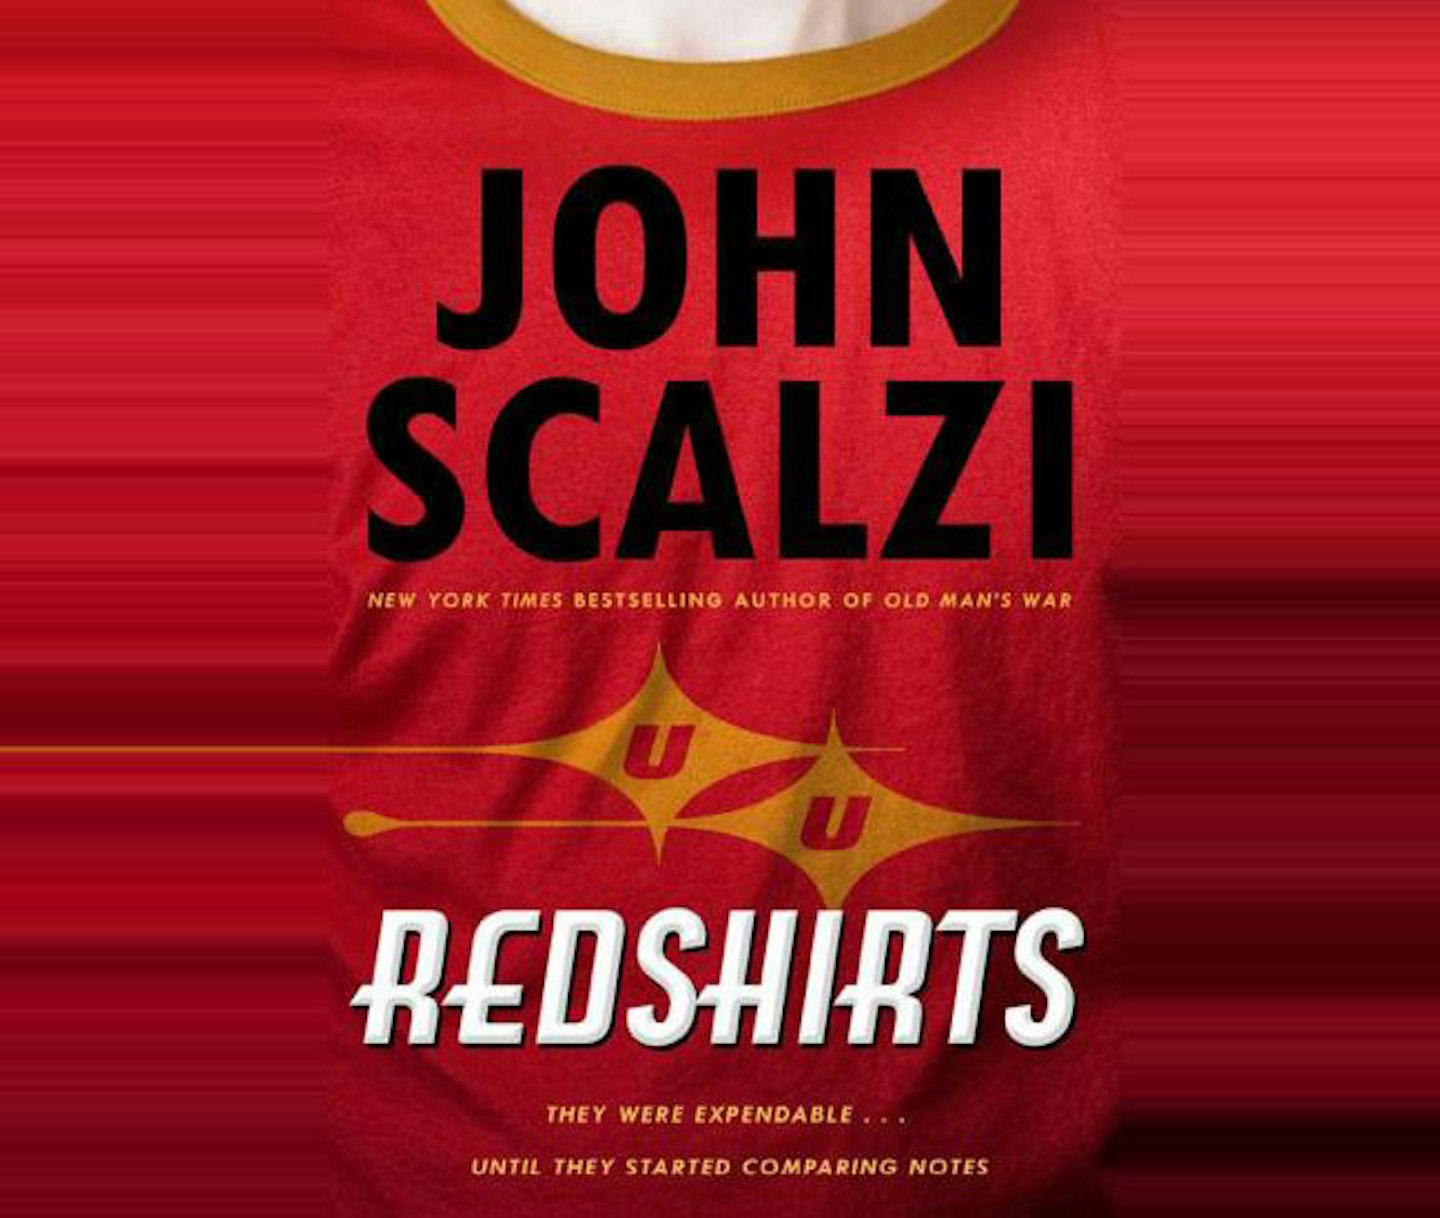 John-Scalzis-Redshirts-Optioned-As-TV-Series